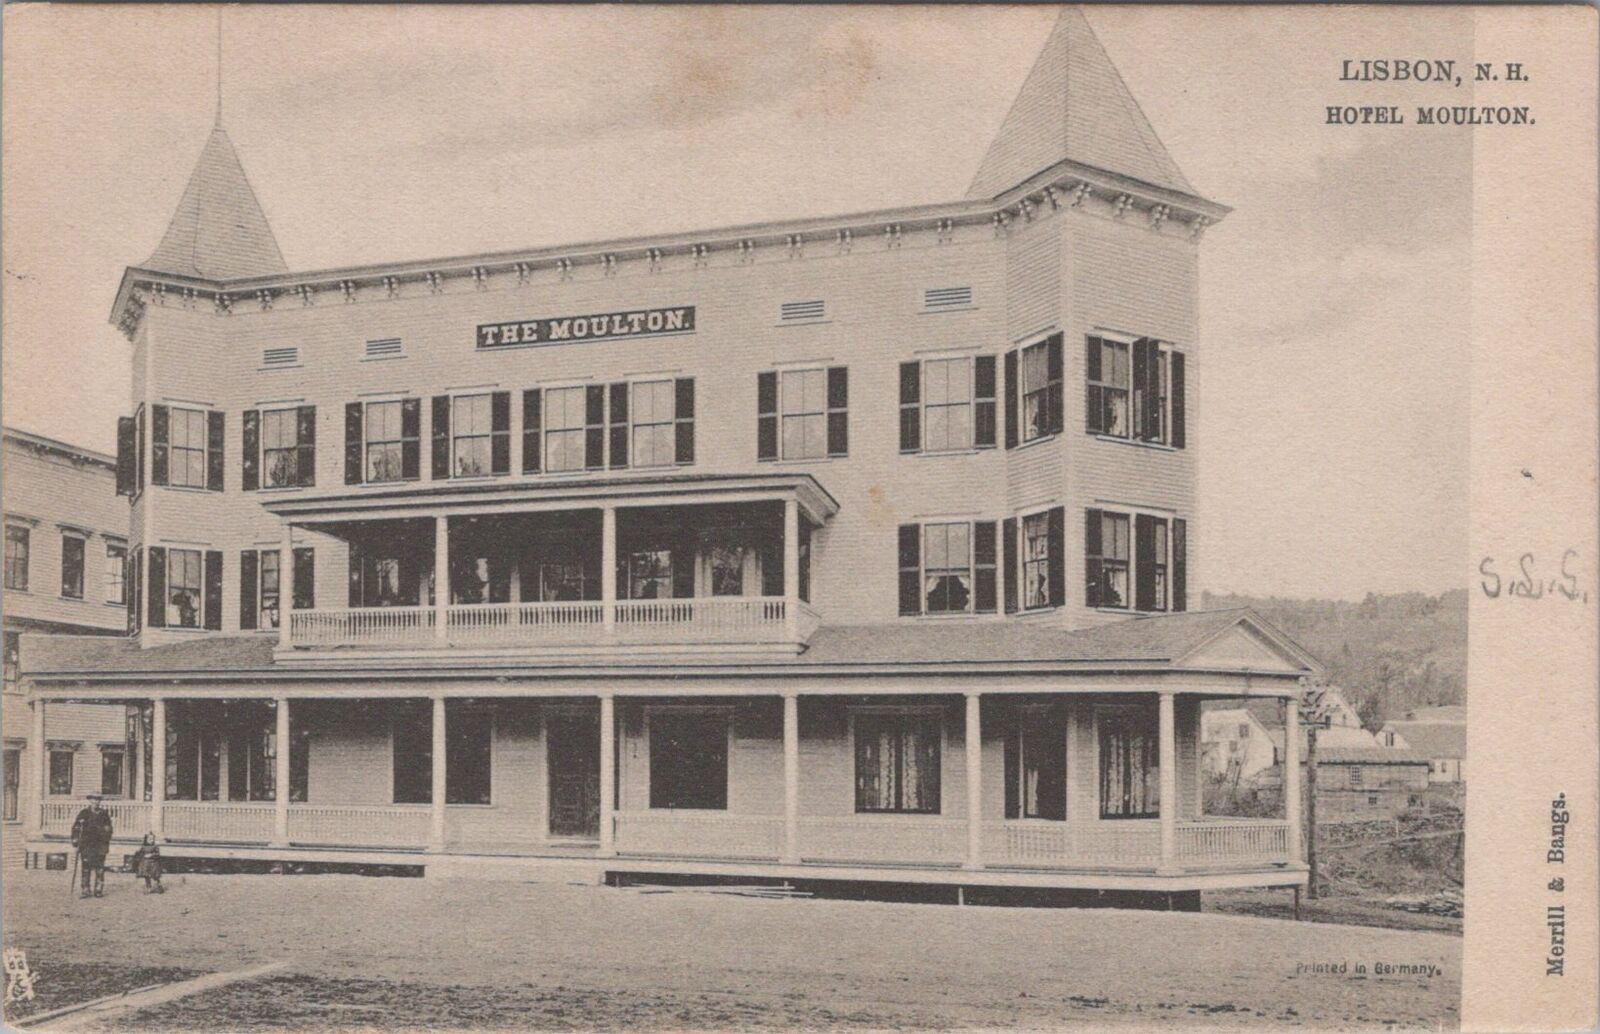 Hotel Moulton The Moulton Lisbon New Hampshire 1906 Tuck Postcard